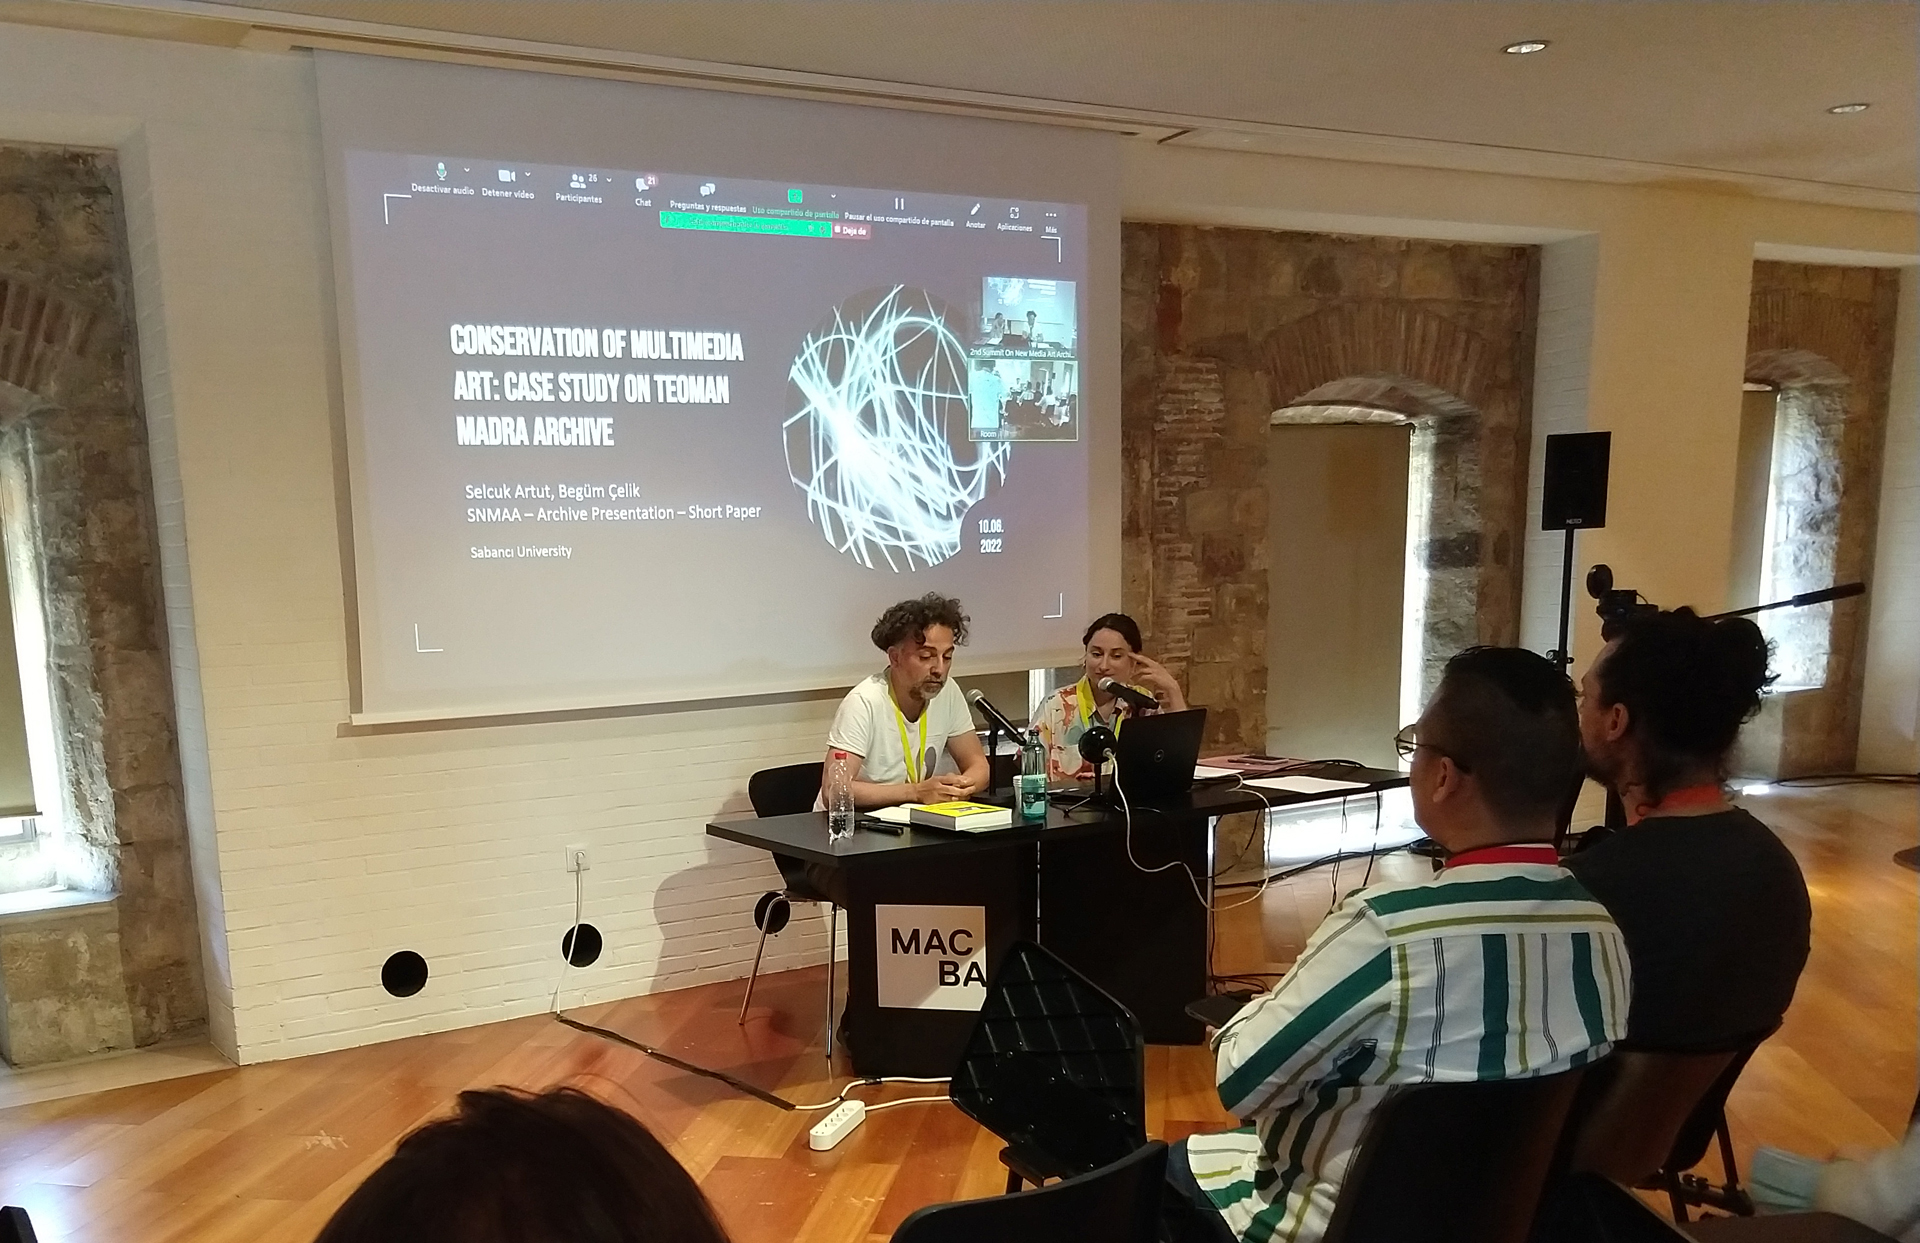 ©ISEA2022: 27th International Symposium on Electronic Art, Selçuk Artut and Begüm Çelik, Conservation of Multimedia Art: Case Study on Teoman Madra Archive